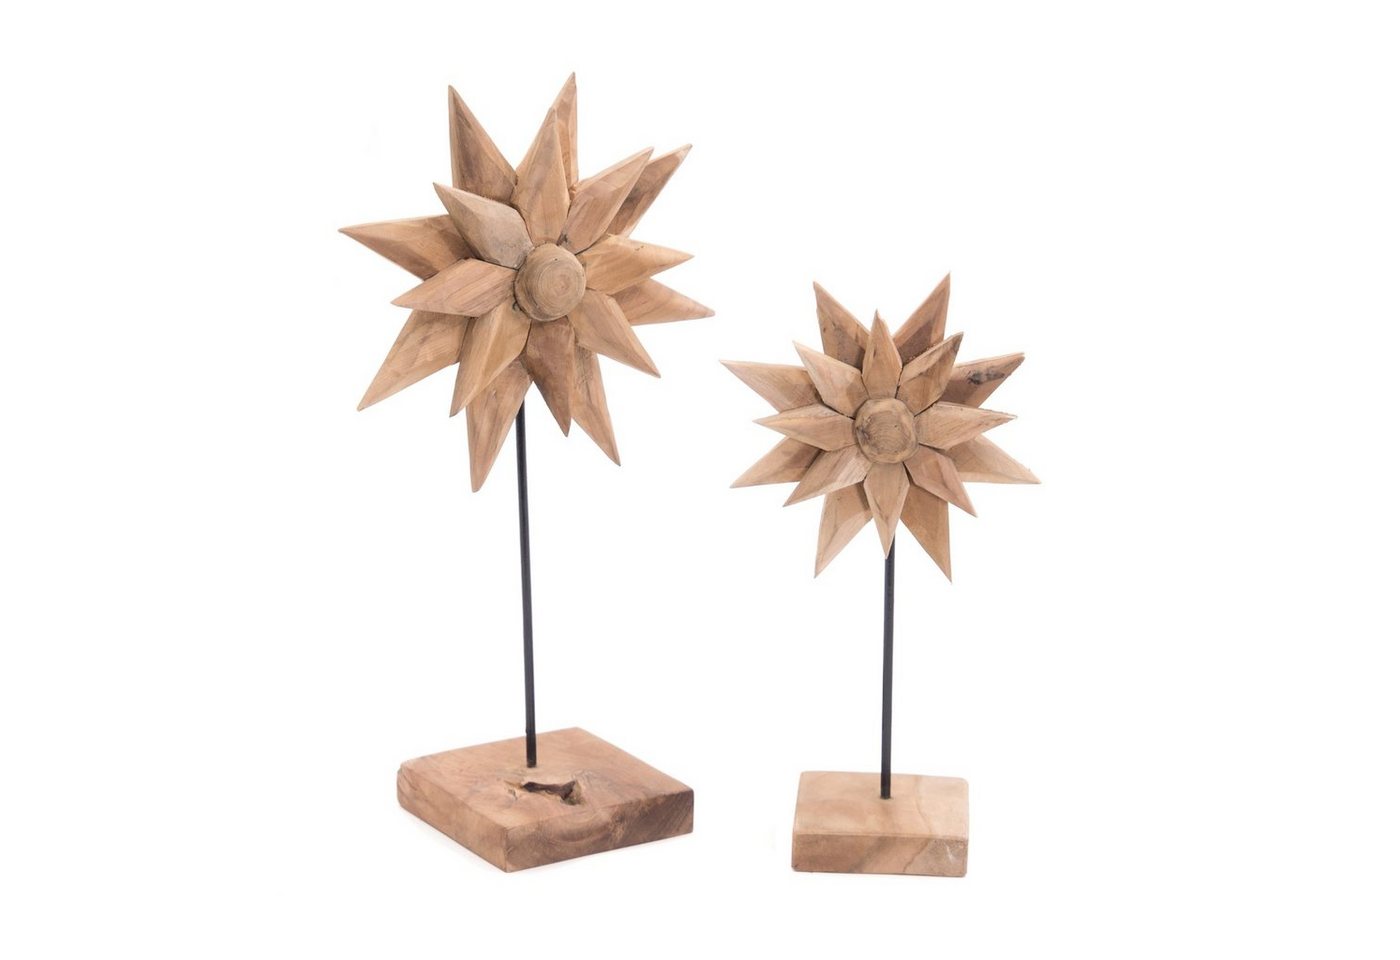 CREEDWOOD Skulptur TEAK SKULPTUR SUNFLOWER", 2-teilig, Holz Aufsteller Blume" von CREEDWOOD